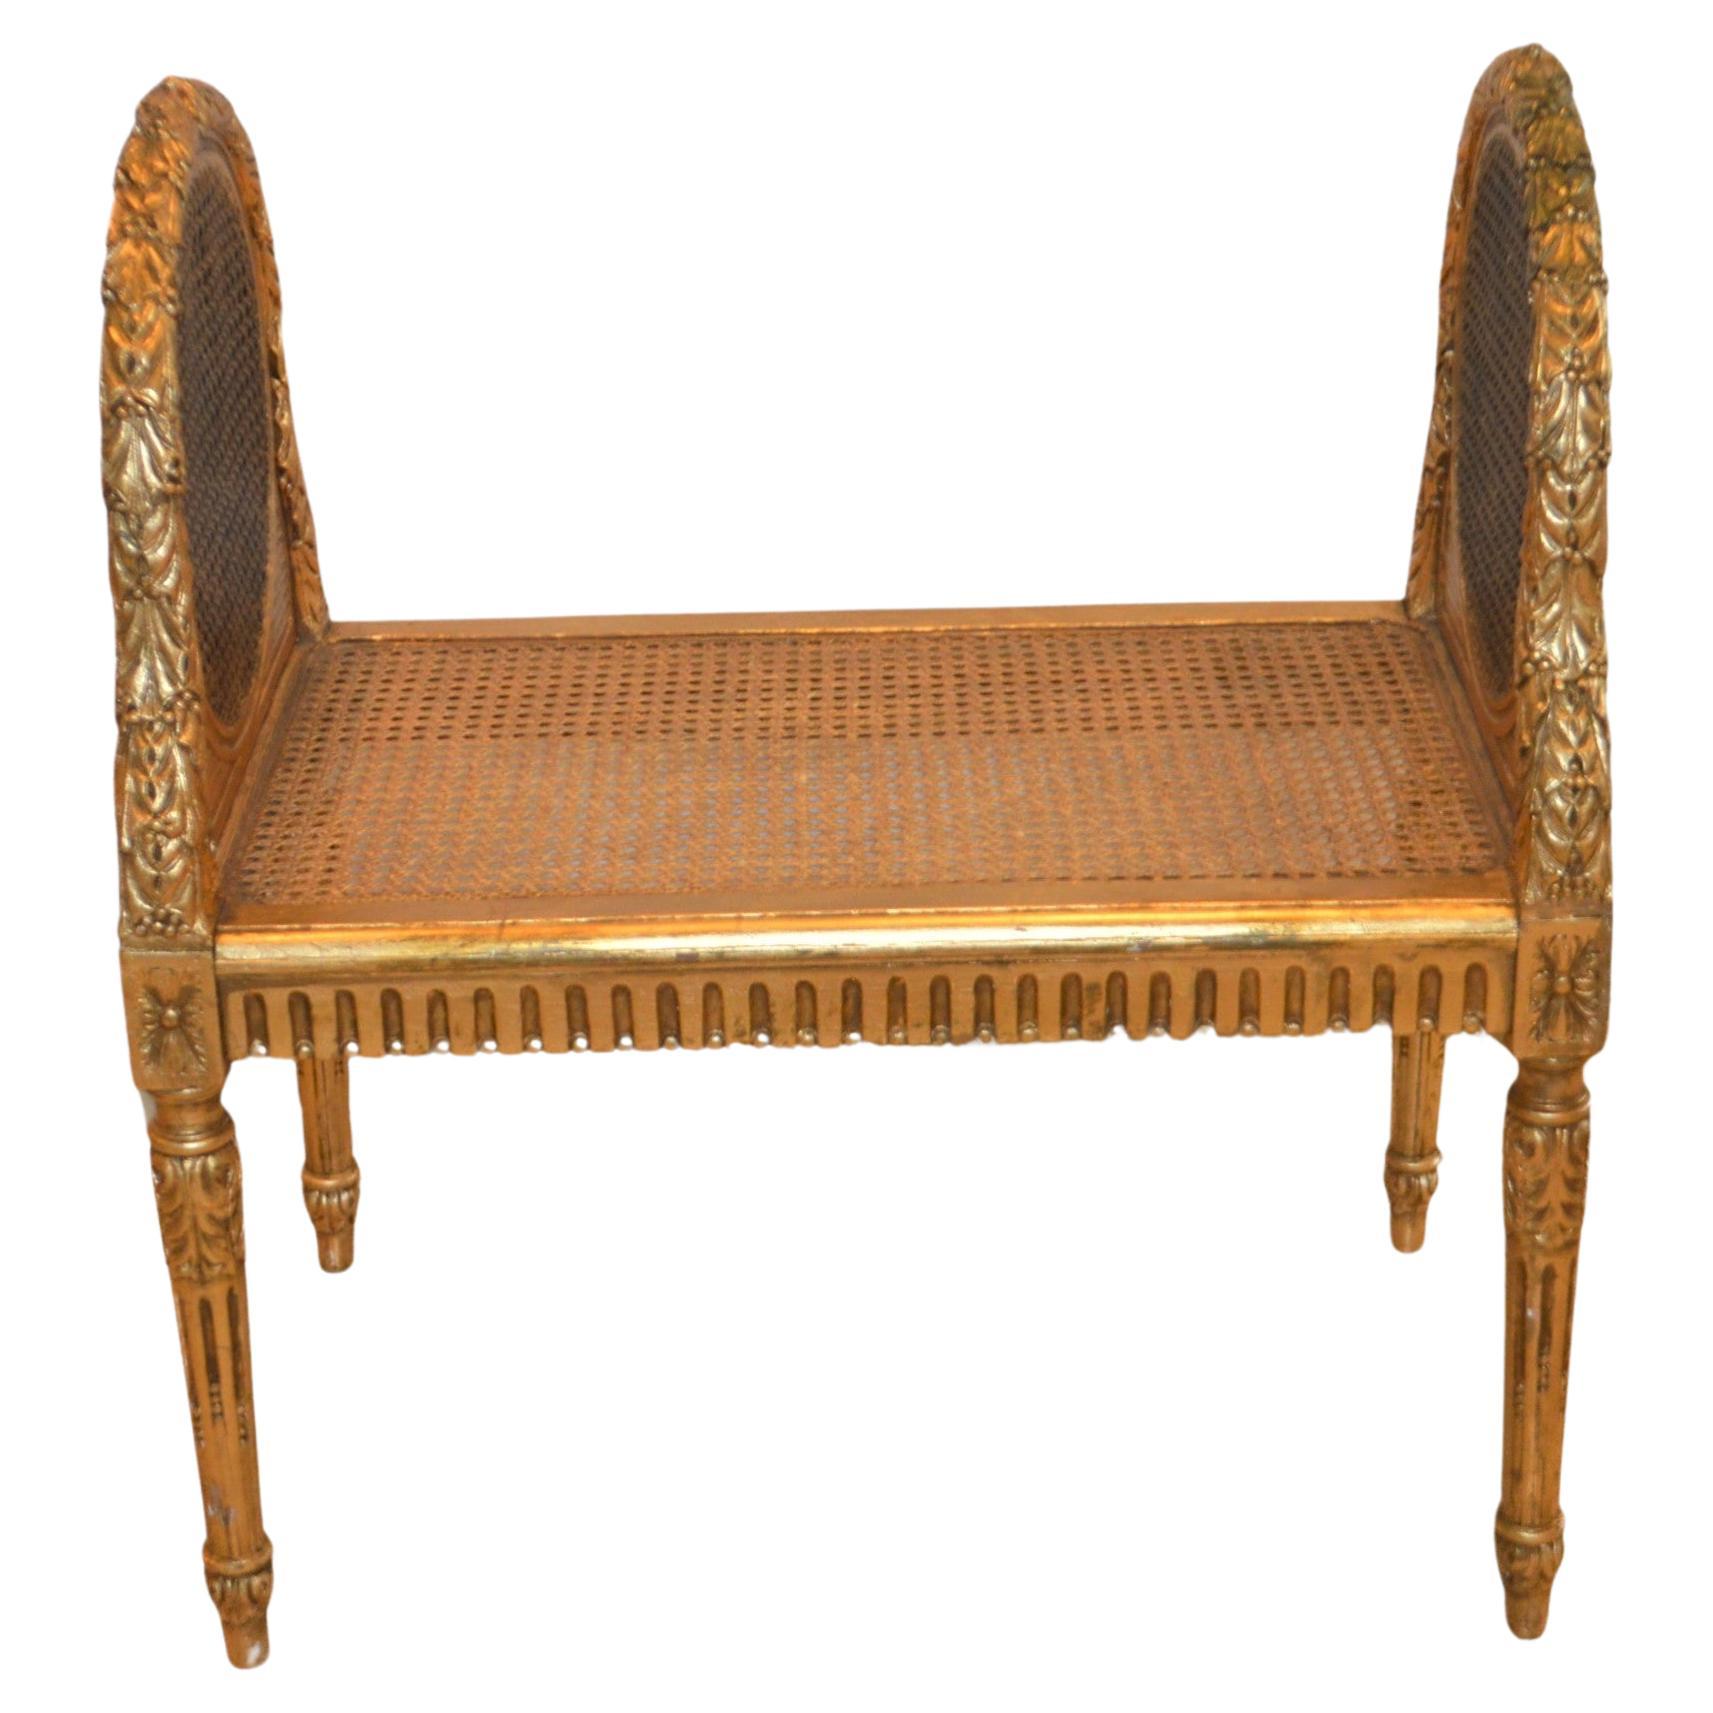 Louis XVI style gilded cane bench, France circa 1900.